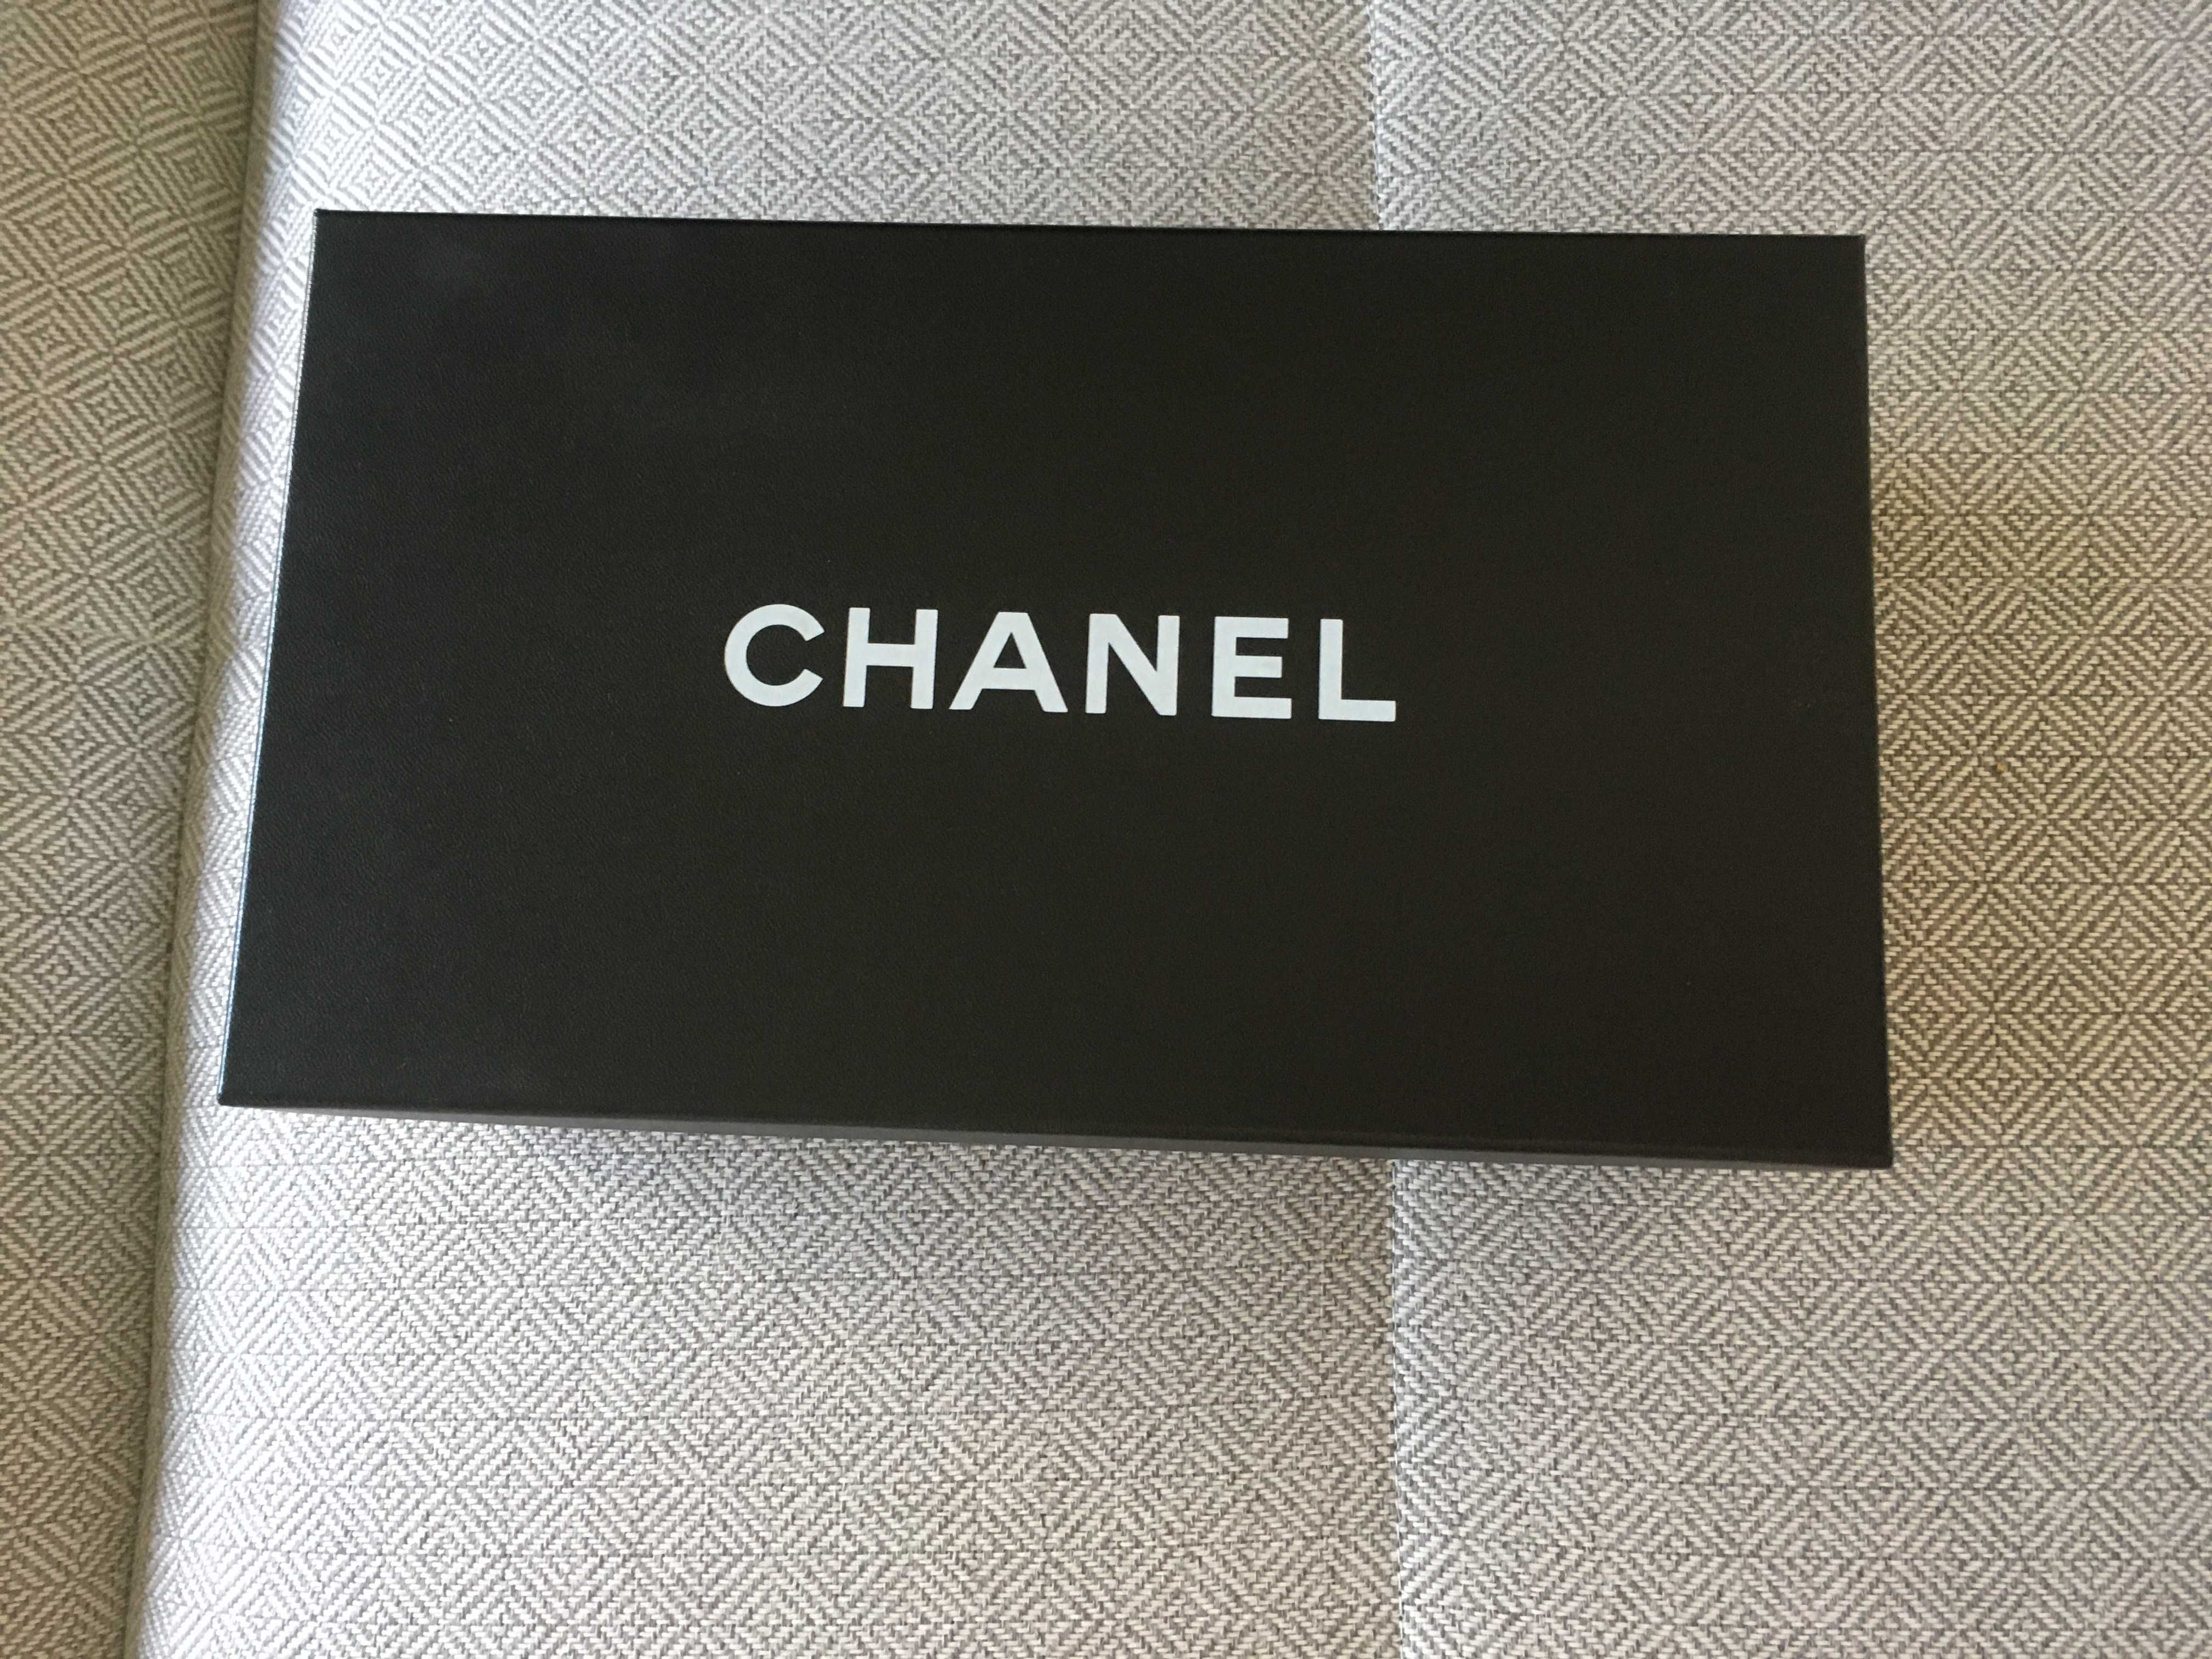 Caixa Chanel preta e branca vintage